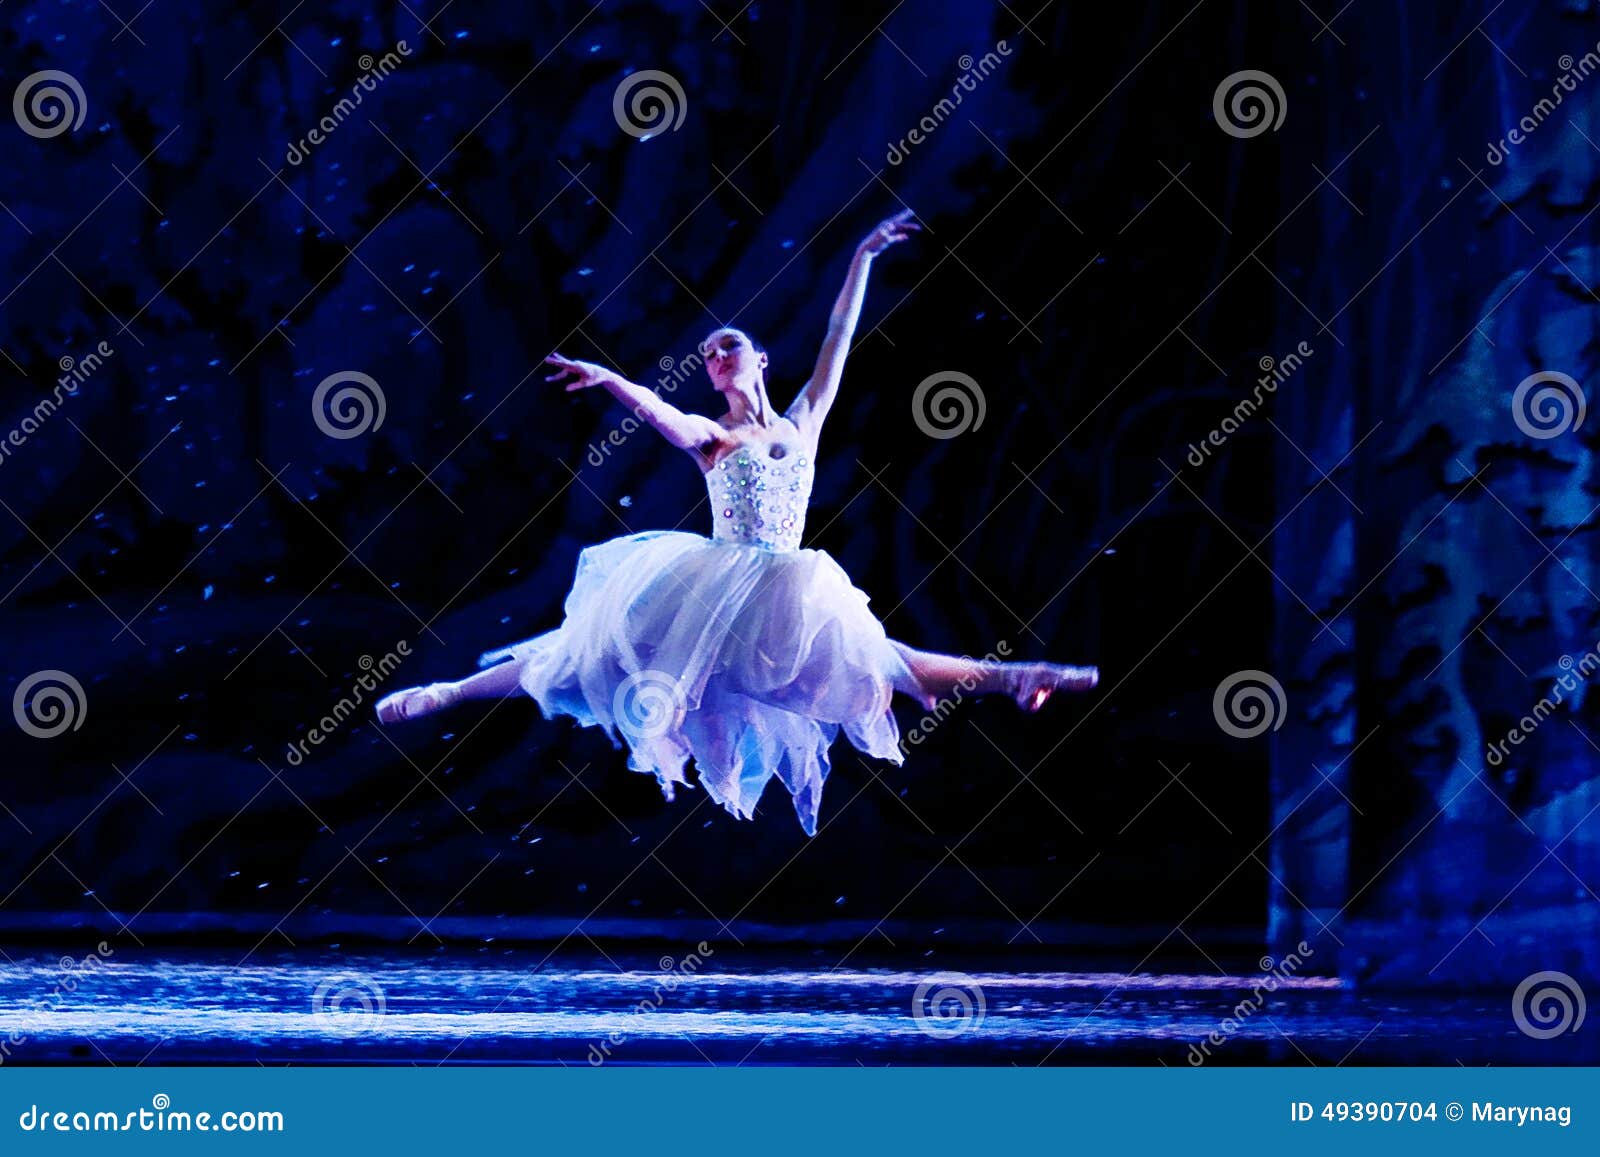 Flying Ballerina editorial stock image. Image of background - 49390704